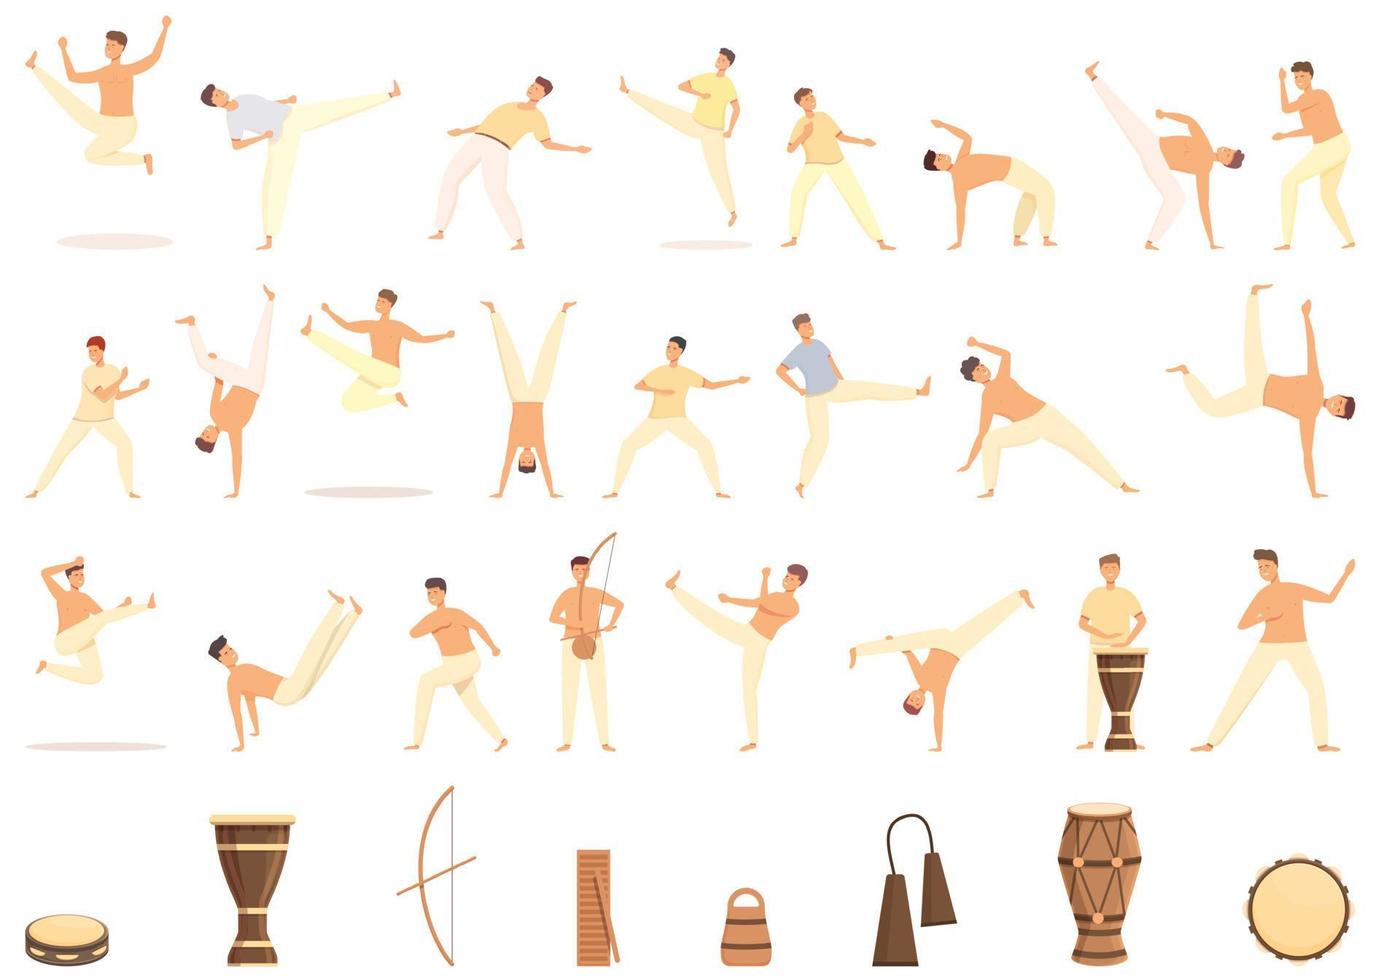 iconos de capoeira establecer vector de dibujos animados. gente acrobatica